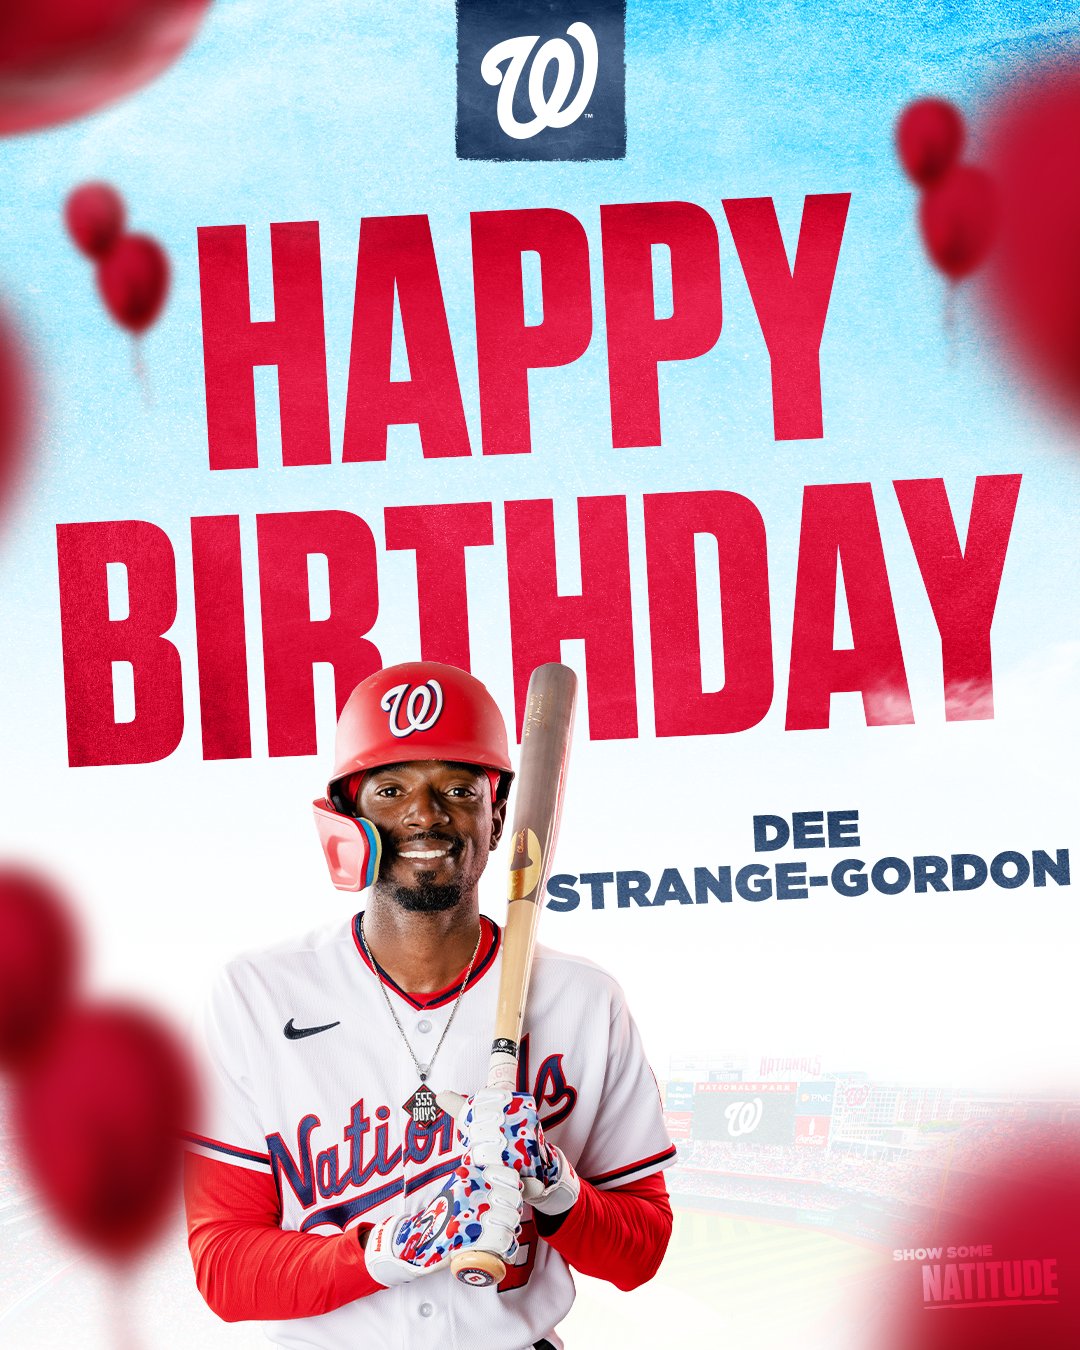 Washington Nationals on X: Help us wish Dee Strange-Gordon a happy  birthday! #NATITUDE  / X